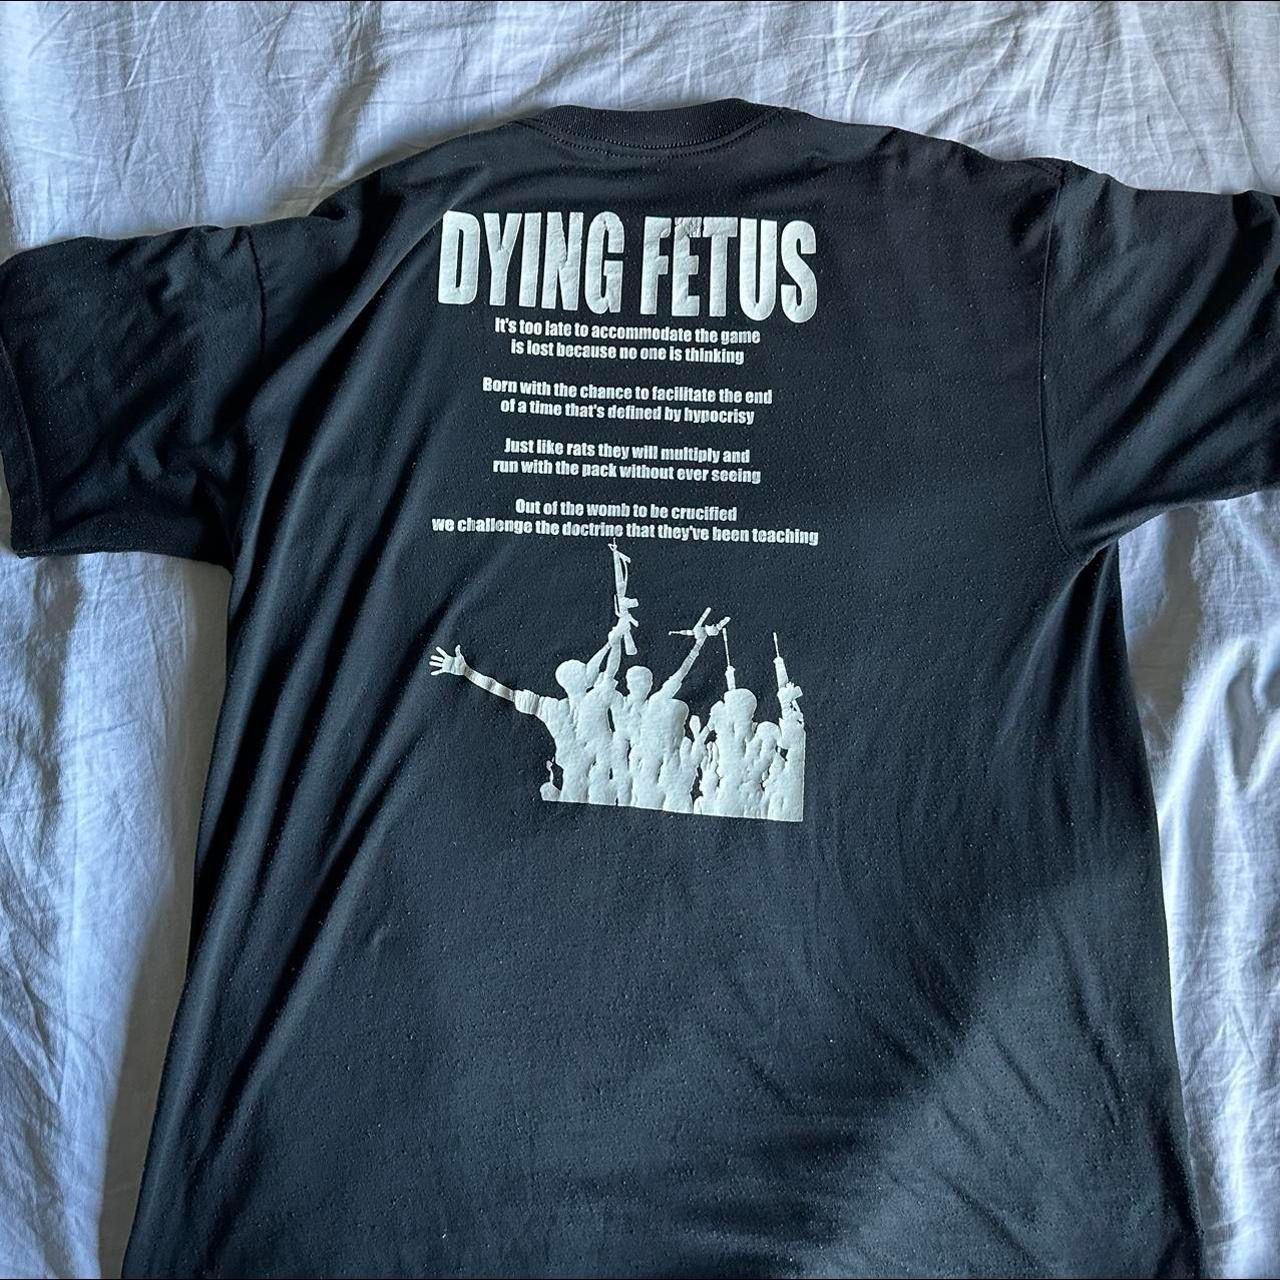 Streetwear Dying Fetus “Destroy The Opposition” Vintage Band Tee, XL Size US XL / EU 56 / 4 - 7 Thumbnail